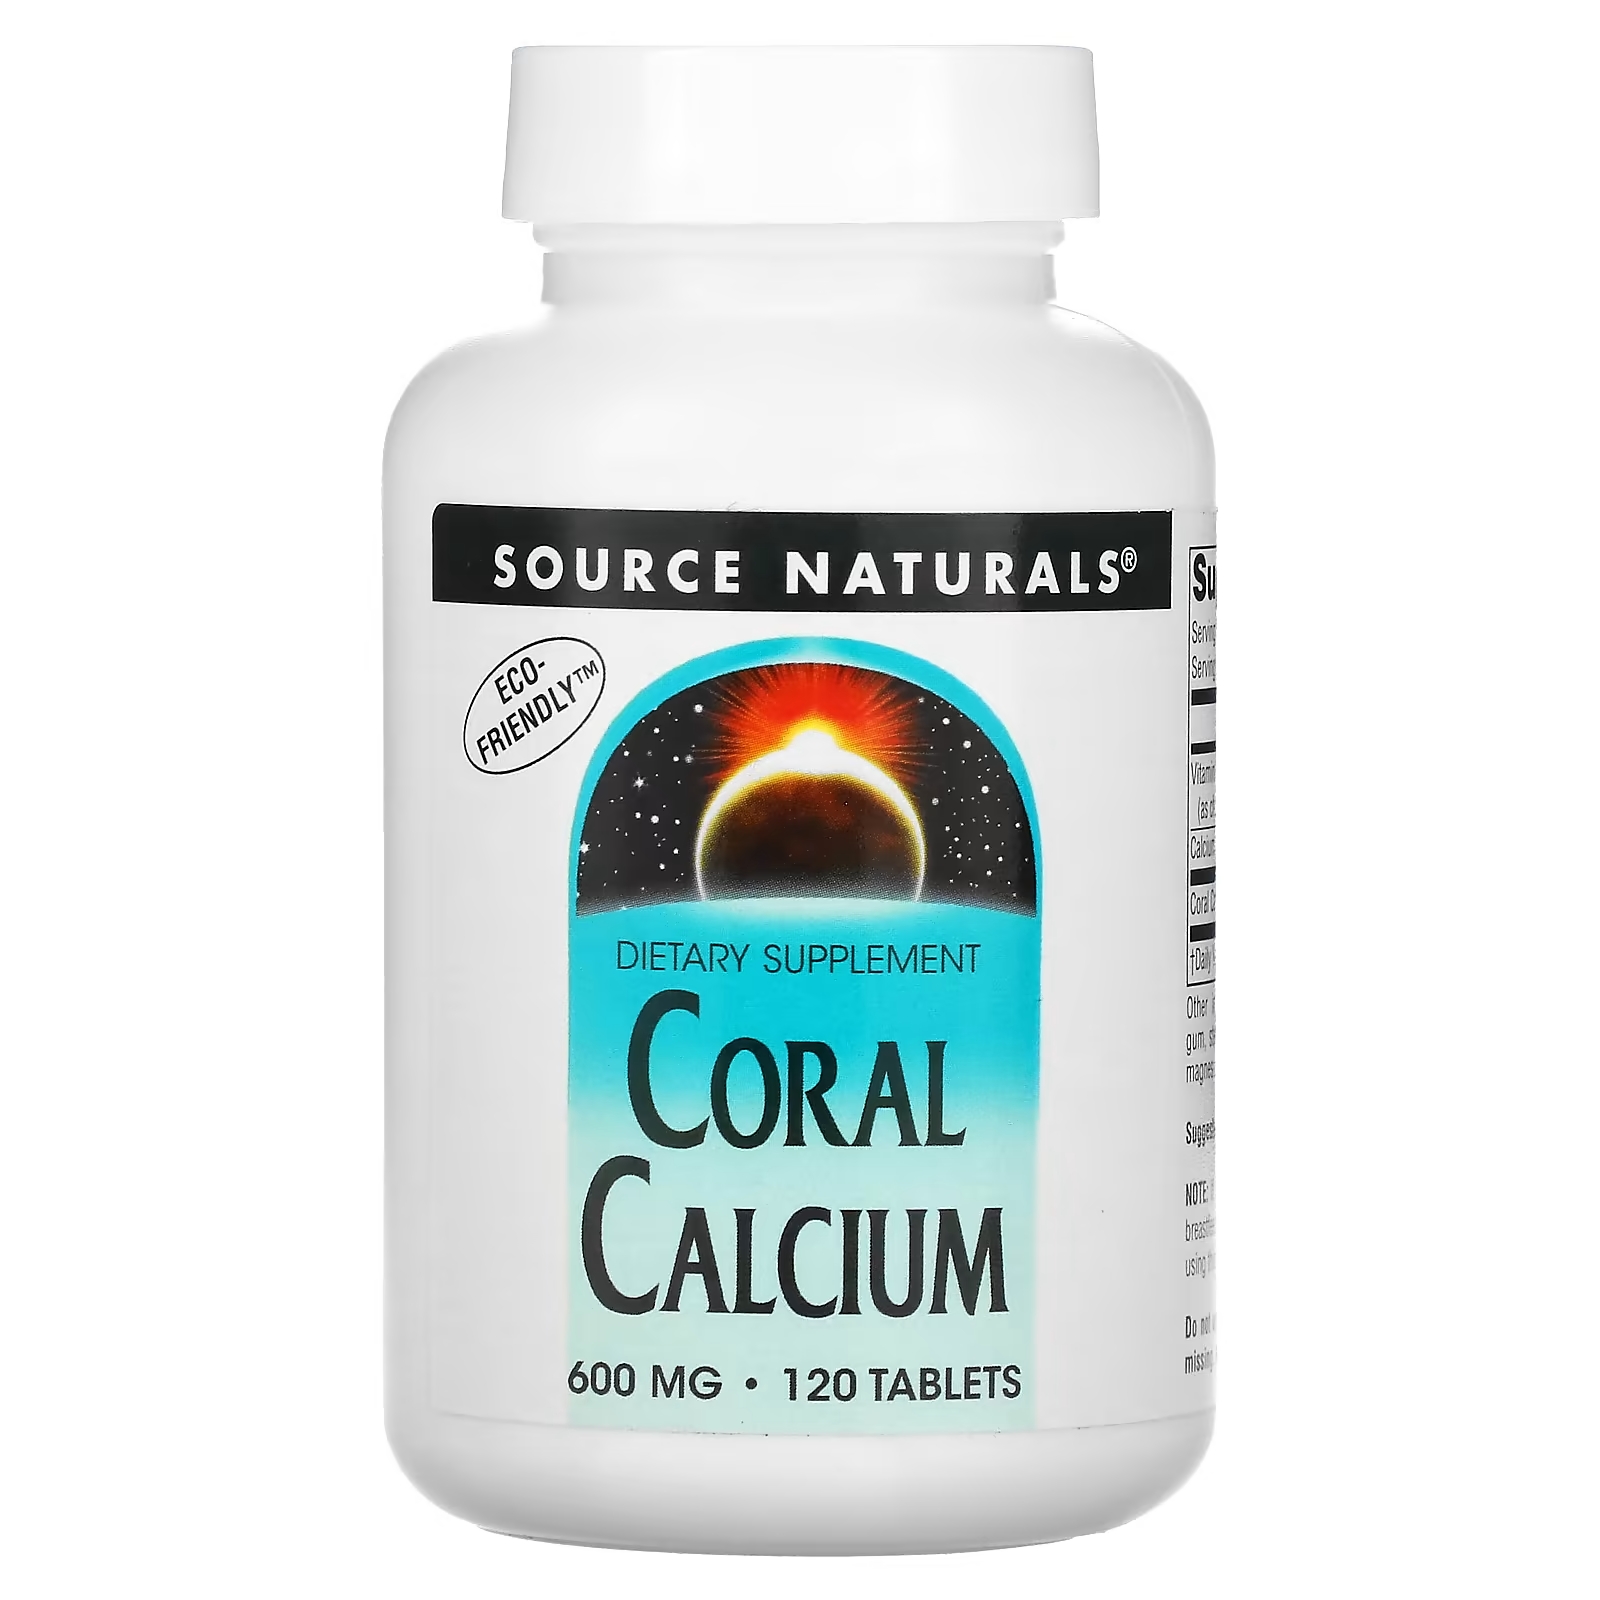 Source Naturals Коралловый кальций 600 мг, 120 таблеток source naturals ccm кальций 300 мг 120 таблеток